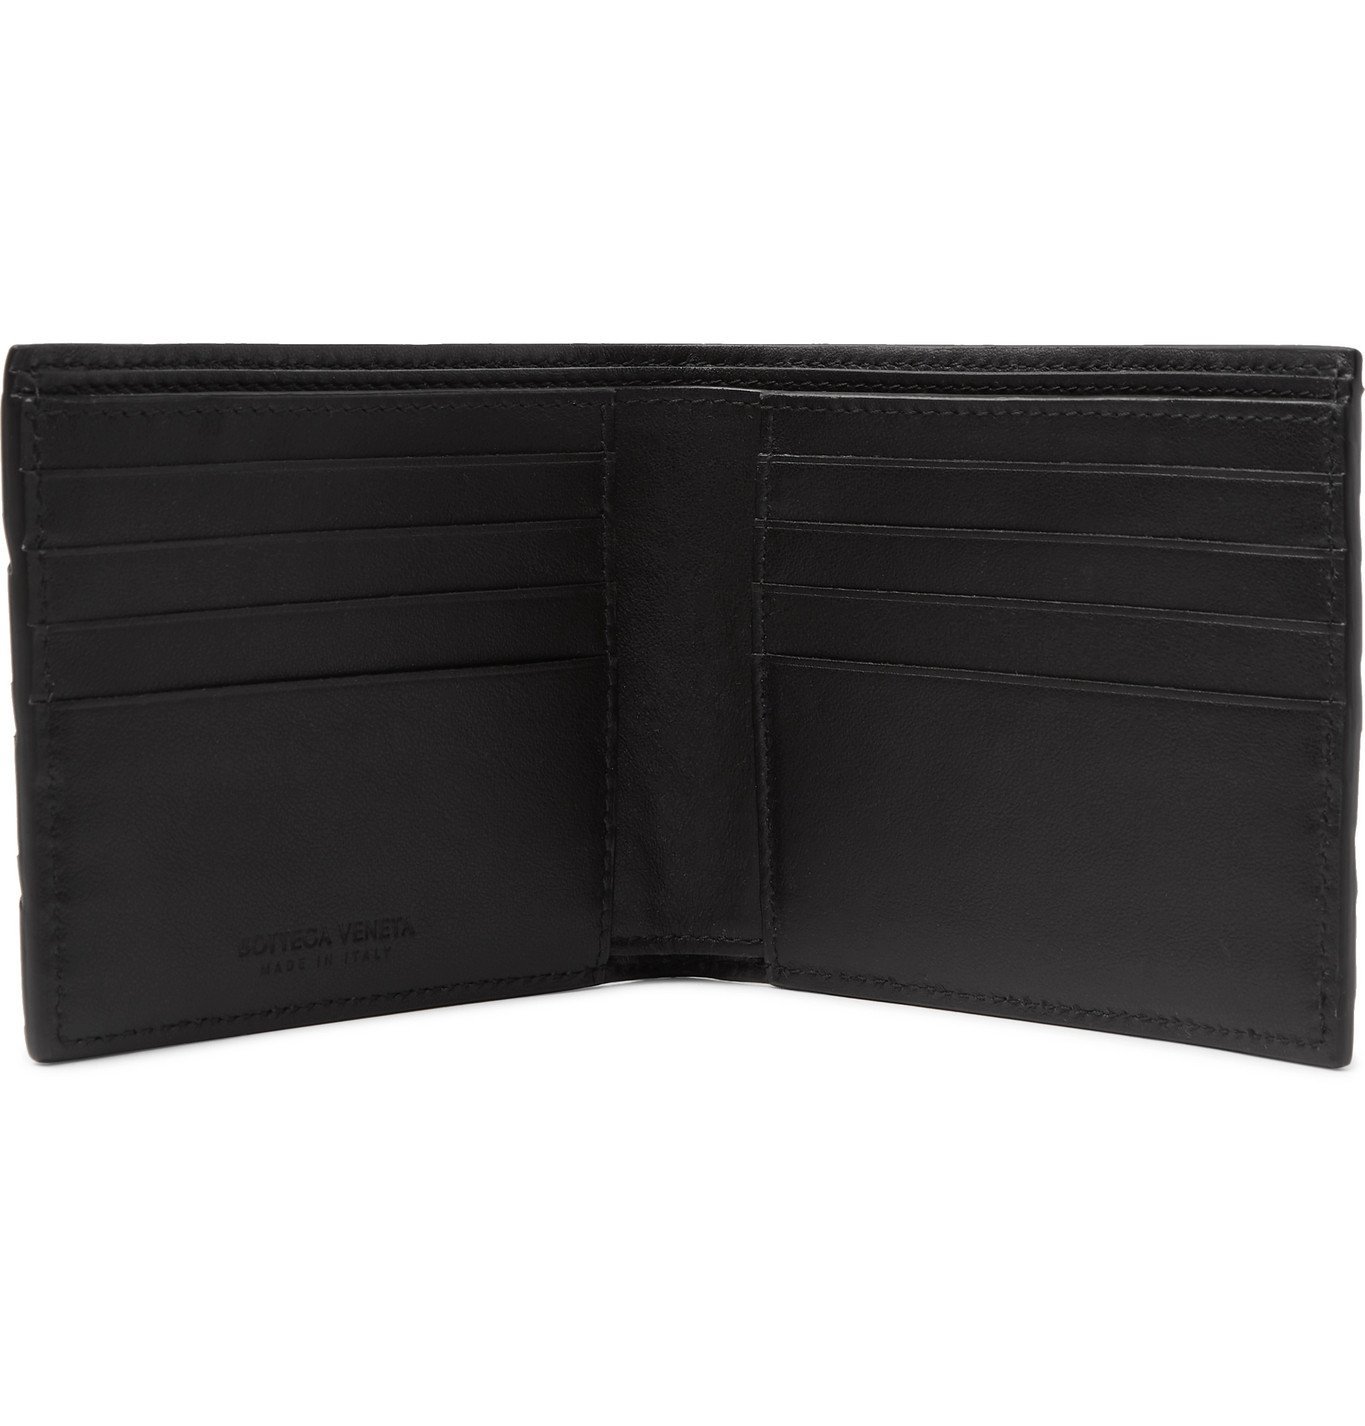 Bottega Veneta - Intrecciato Leather Billfold Wallet - Black Bottega Veneta